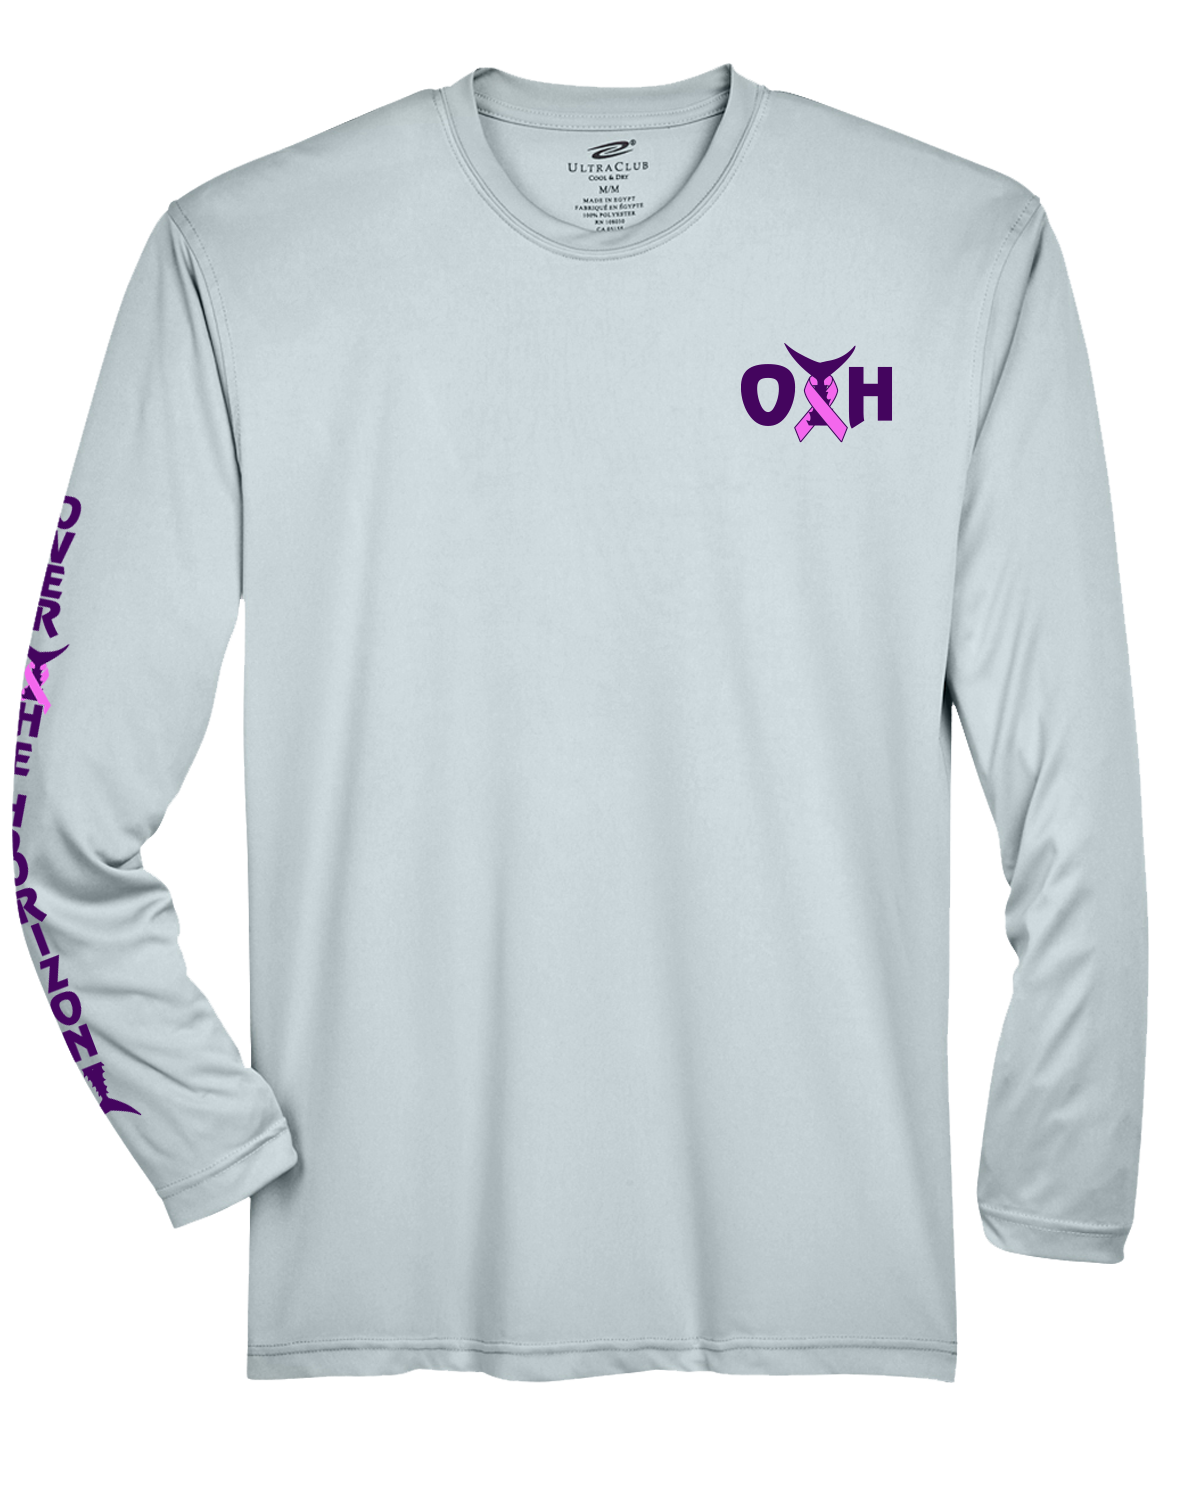 O.T.H. Breast Cancer Mermaid Long Sleeve ATHLETIC Unisex shirt